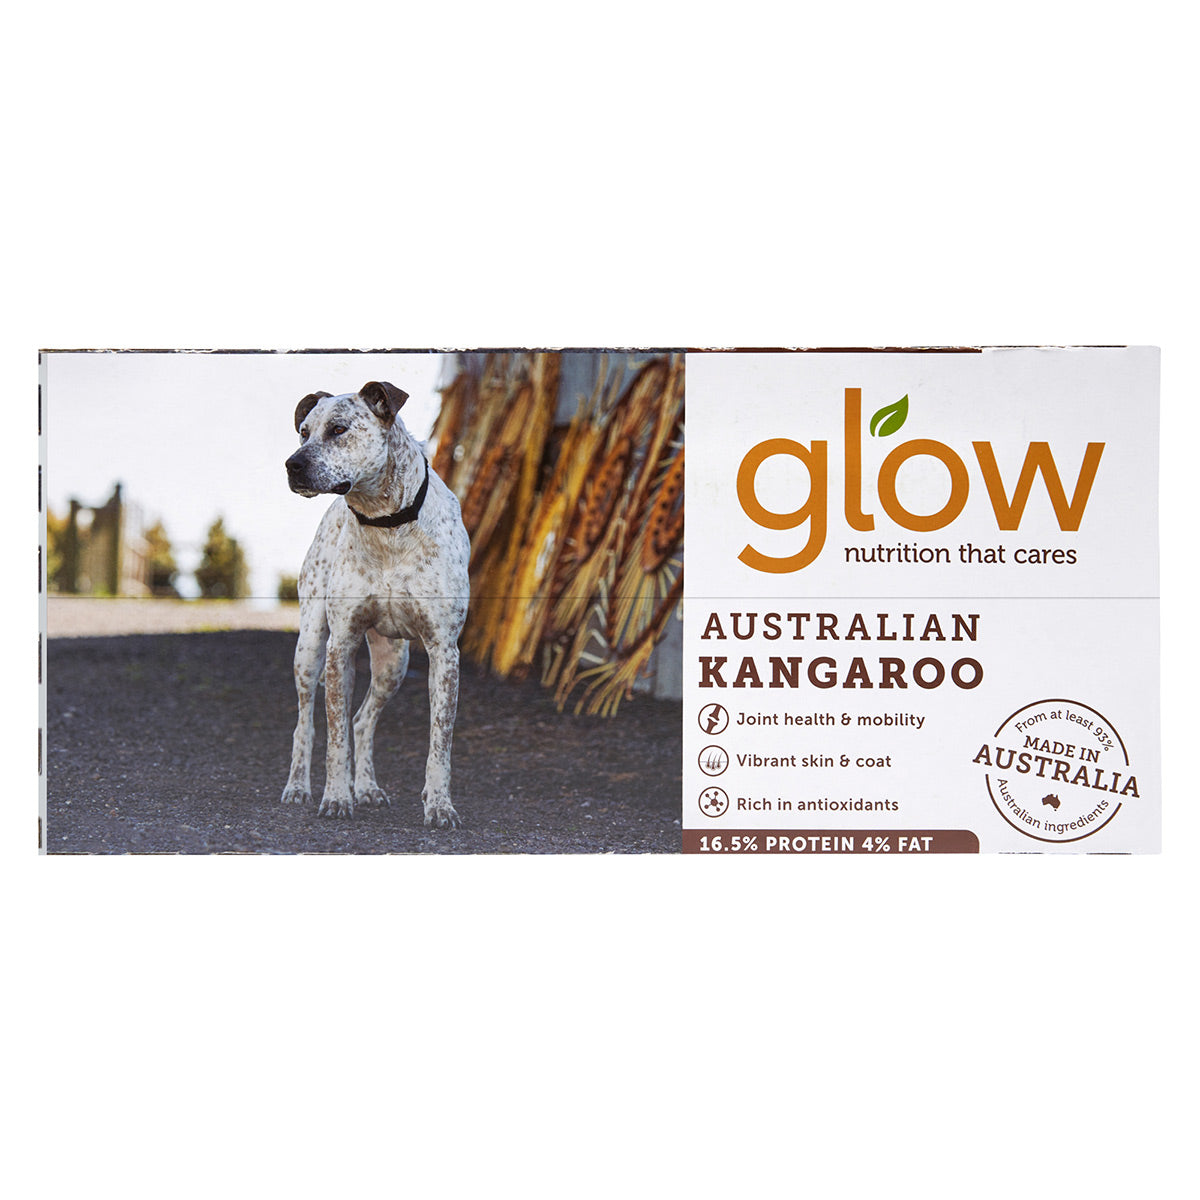 Glow Adult Australian Kangaroo Raw Dog Food 2.72kg